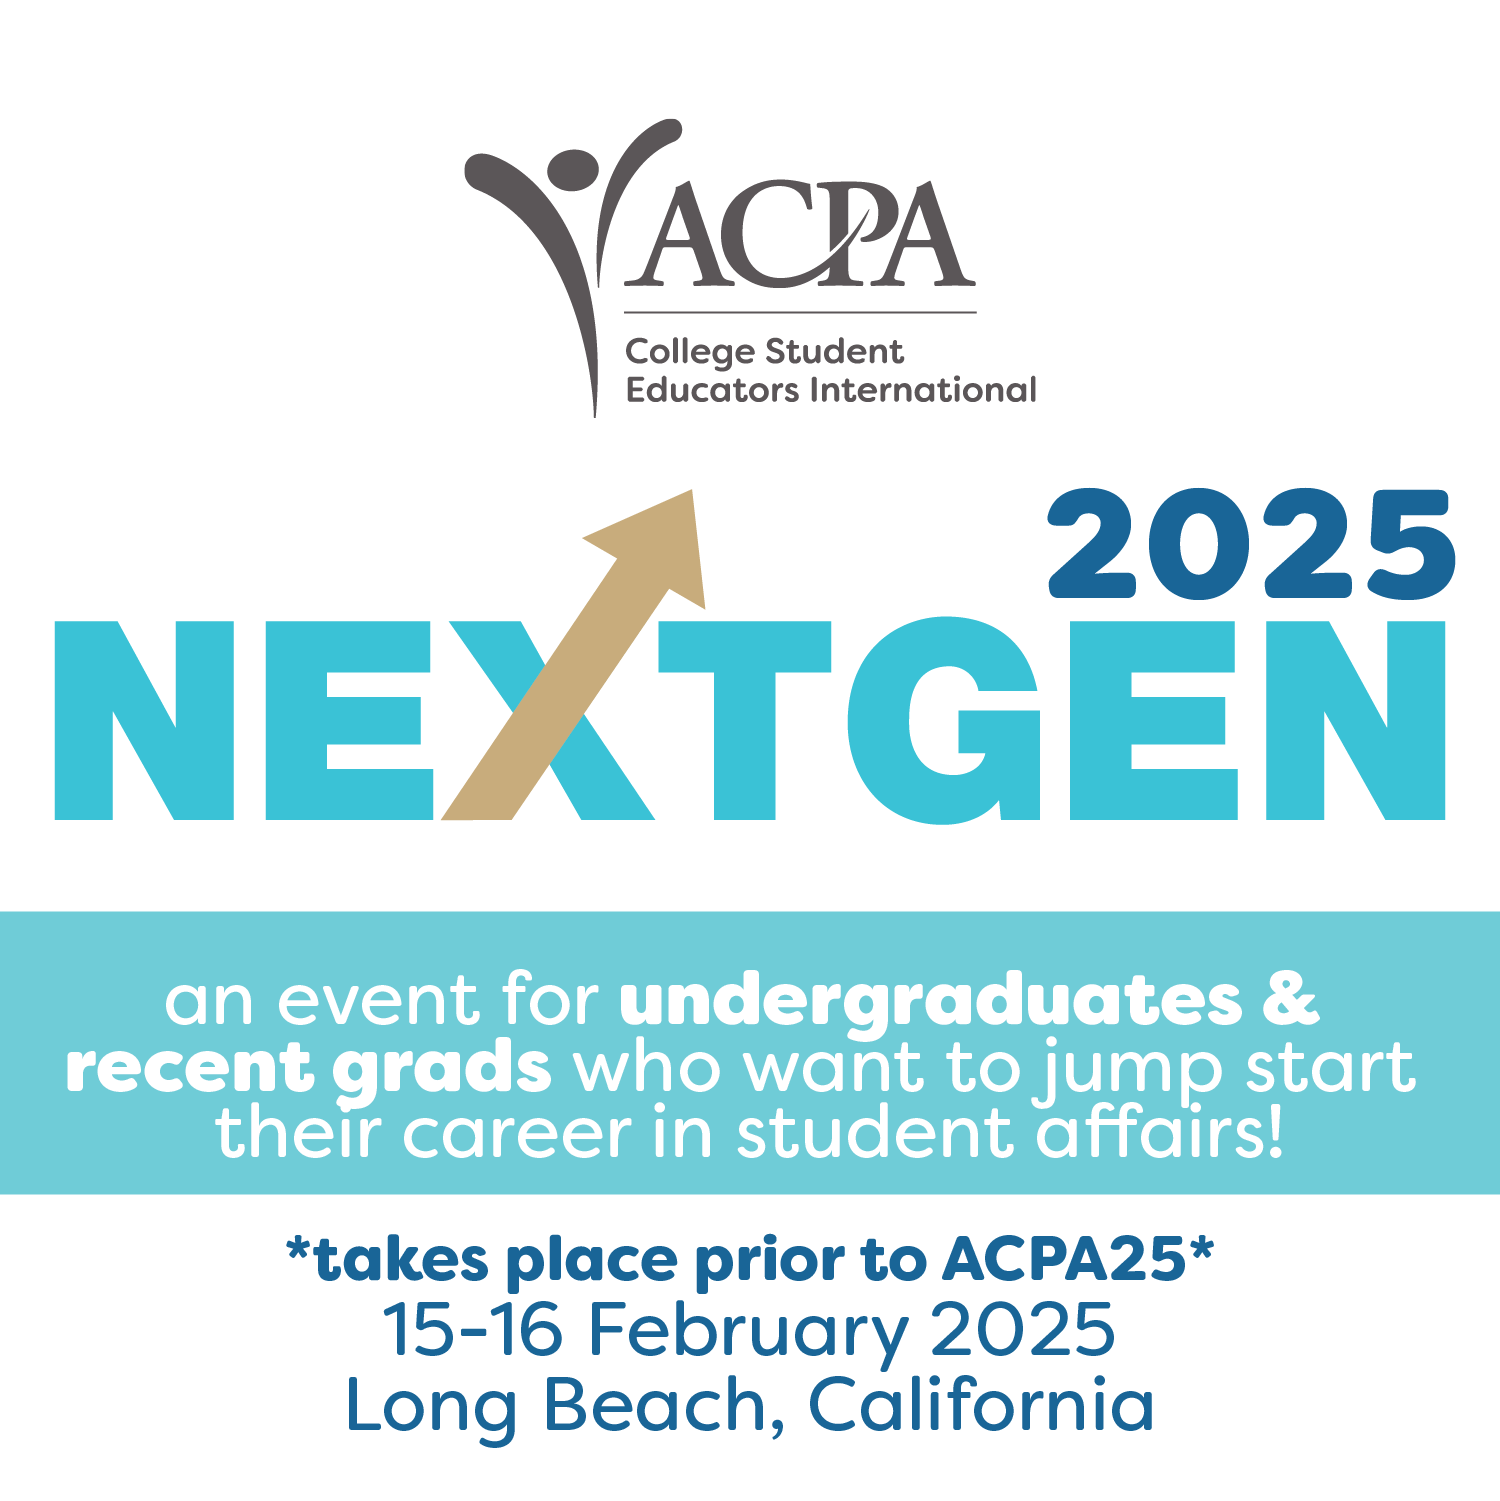 NextGen 2025 an event for undergraduates & recent grads who want to jump start their career in student affairs! *takes place prior to ACPA25* 15-16 February 2025 Long Beach, California